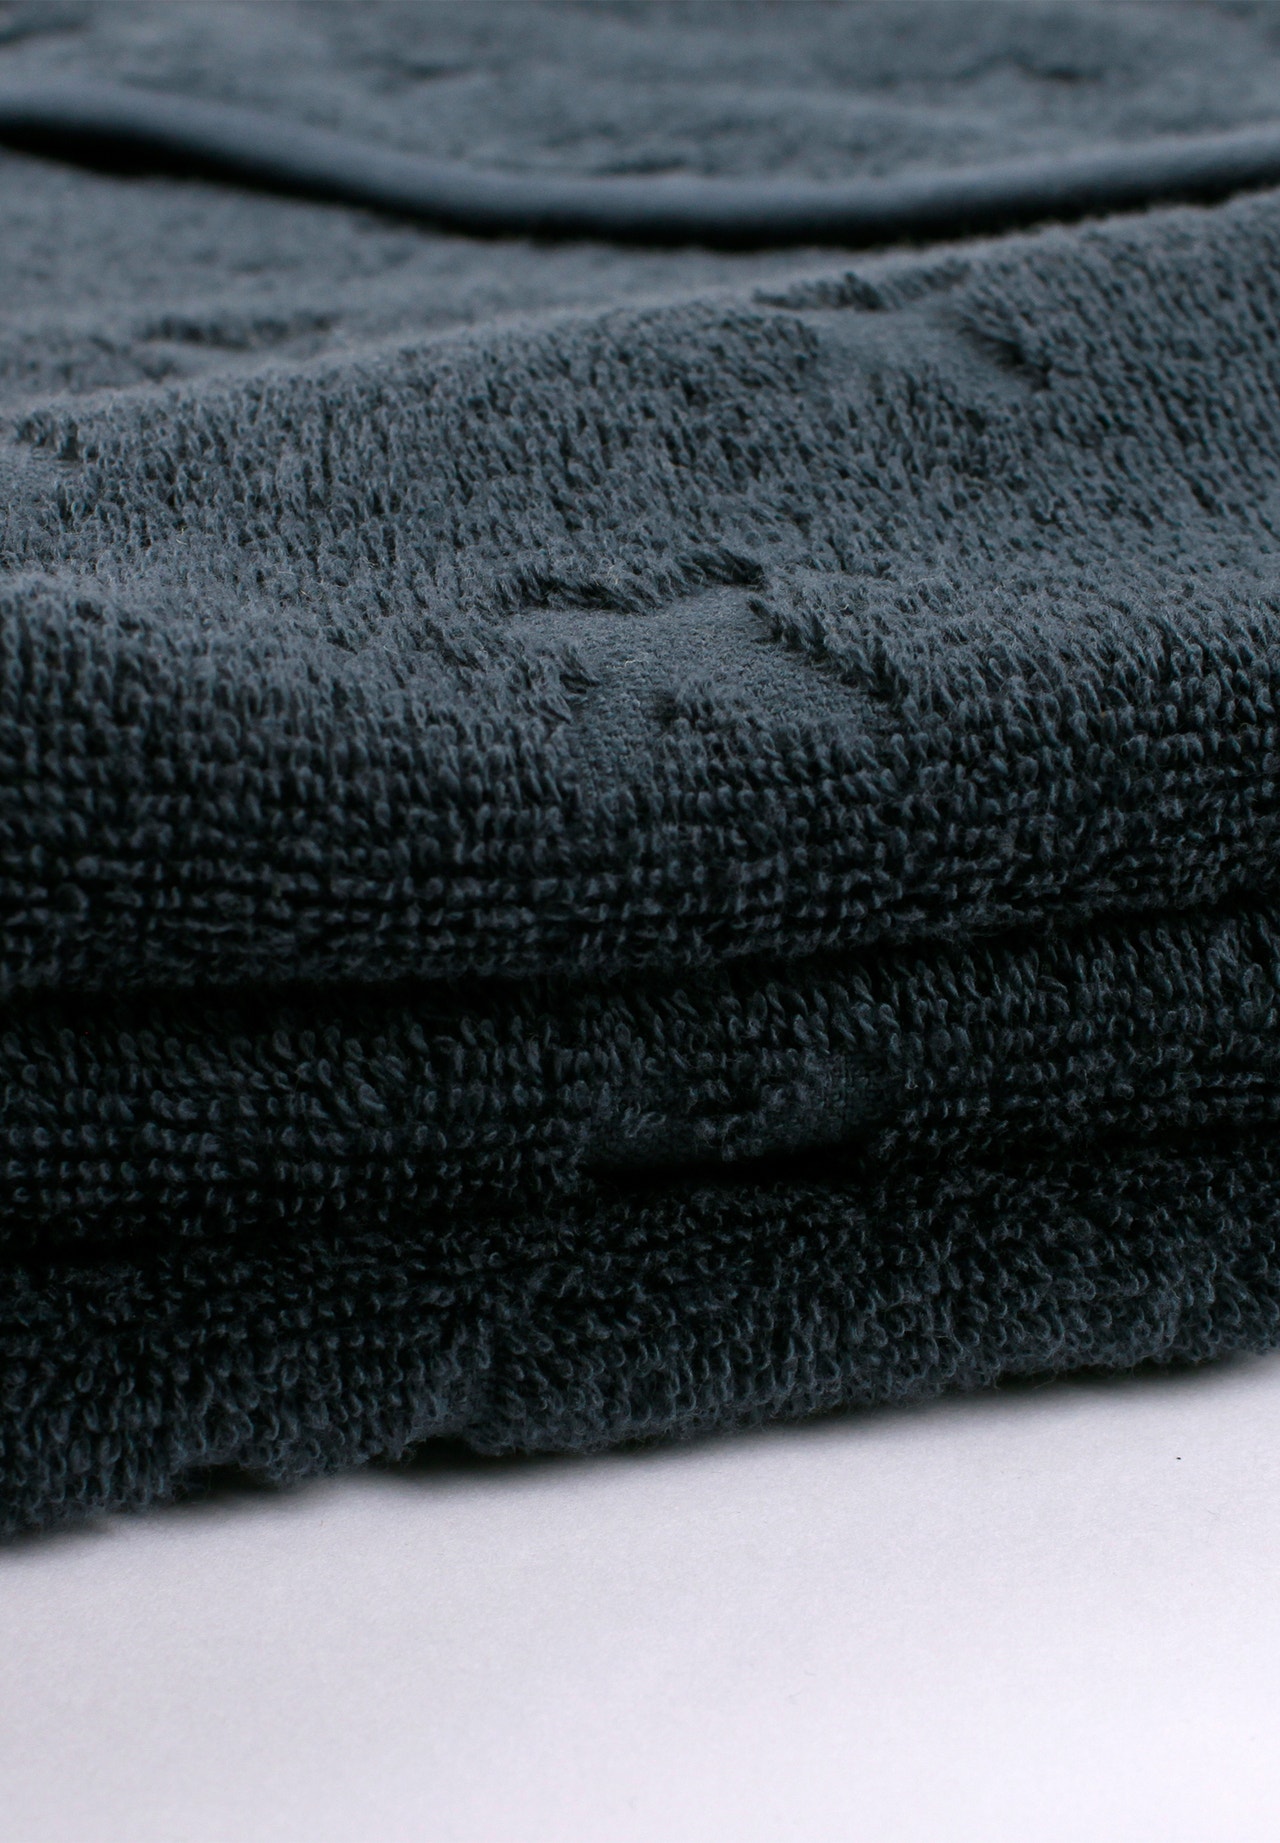 MAMA.LICIOUS müsli swaddle towel -Midnight - 1569002701